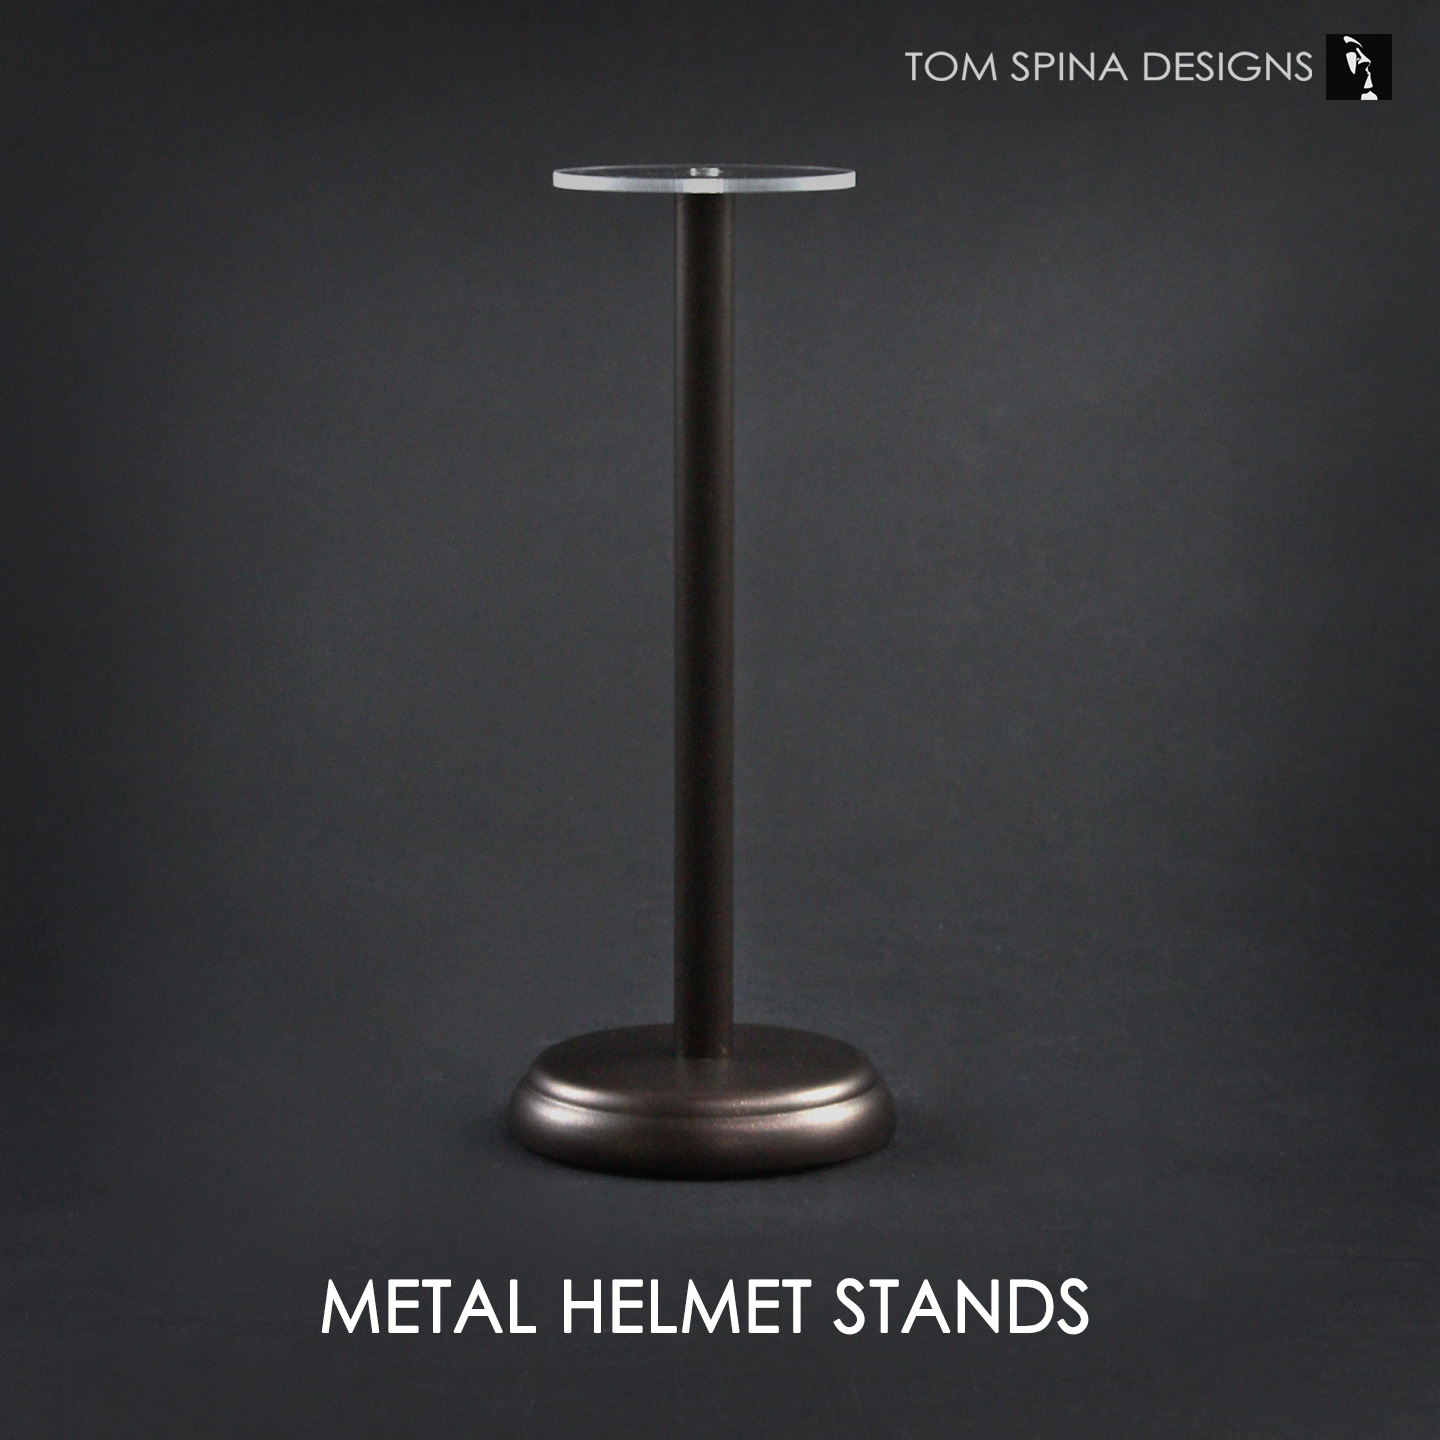 NEW! Metal Helmet Stand - Tom Spina Designs » Tom Spina Designs